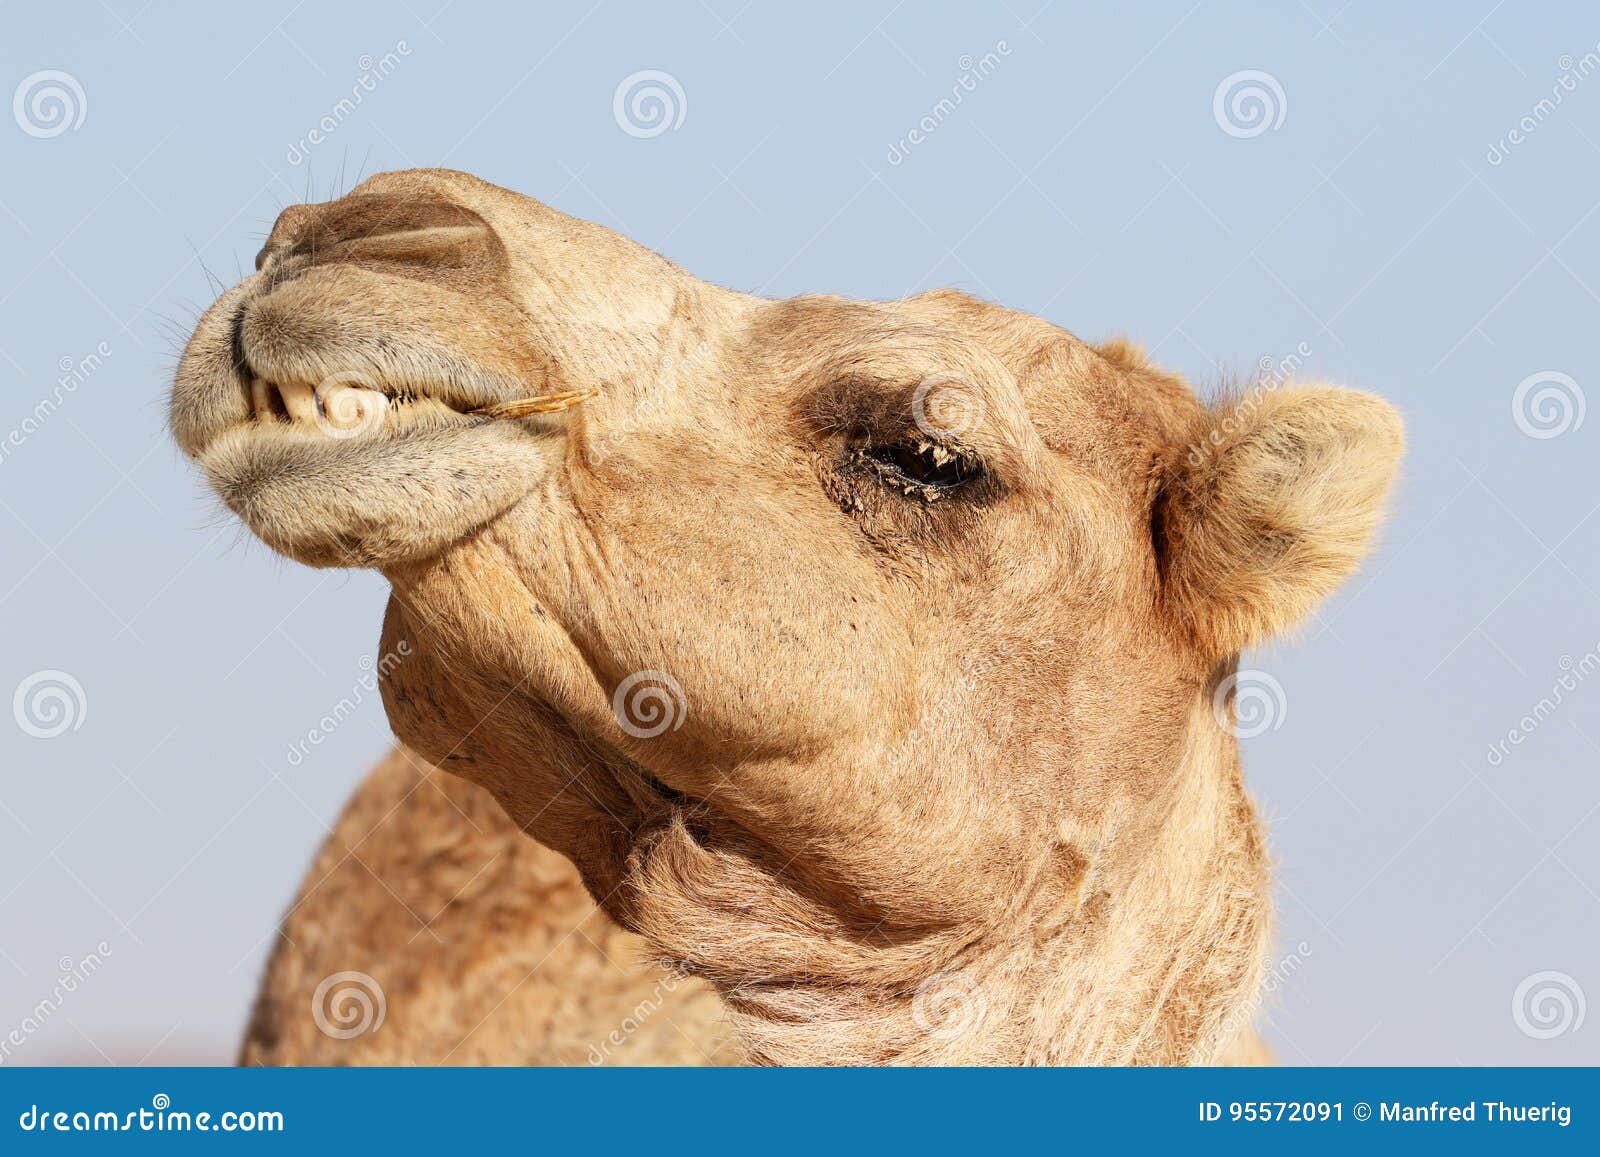 Фото Смешного Верблюда